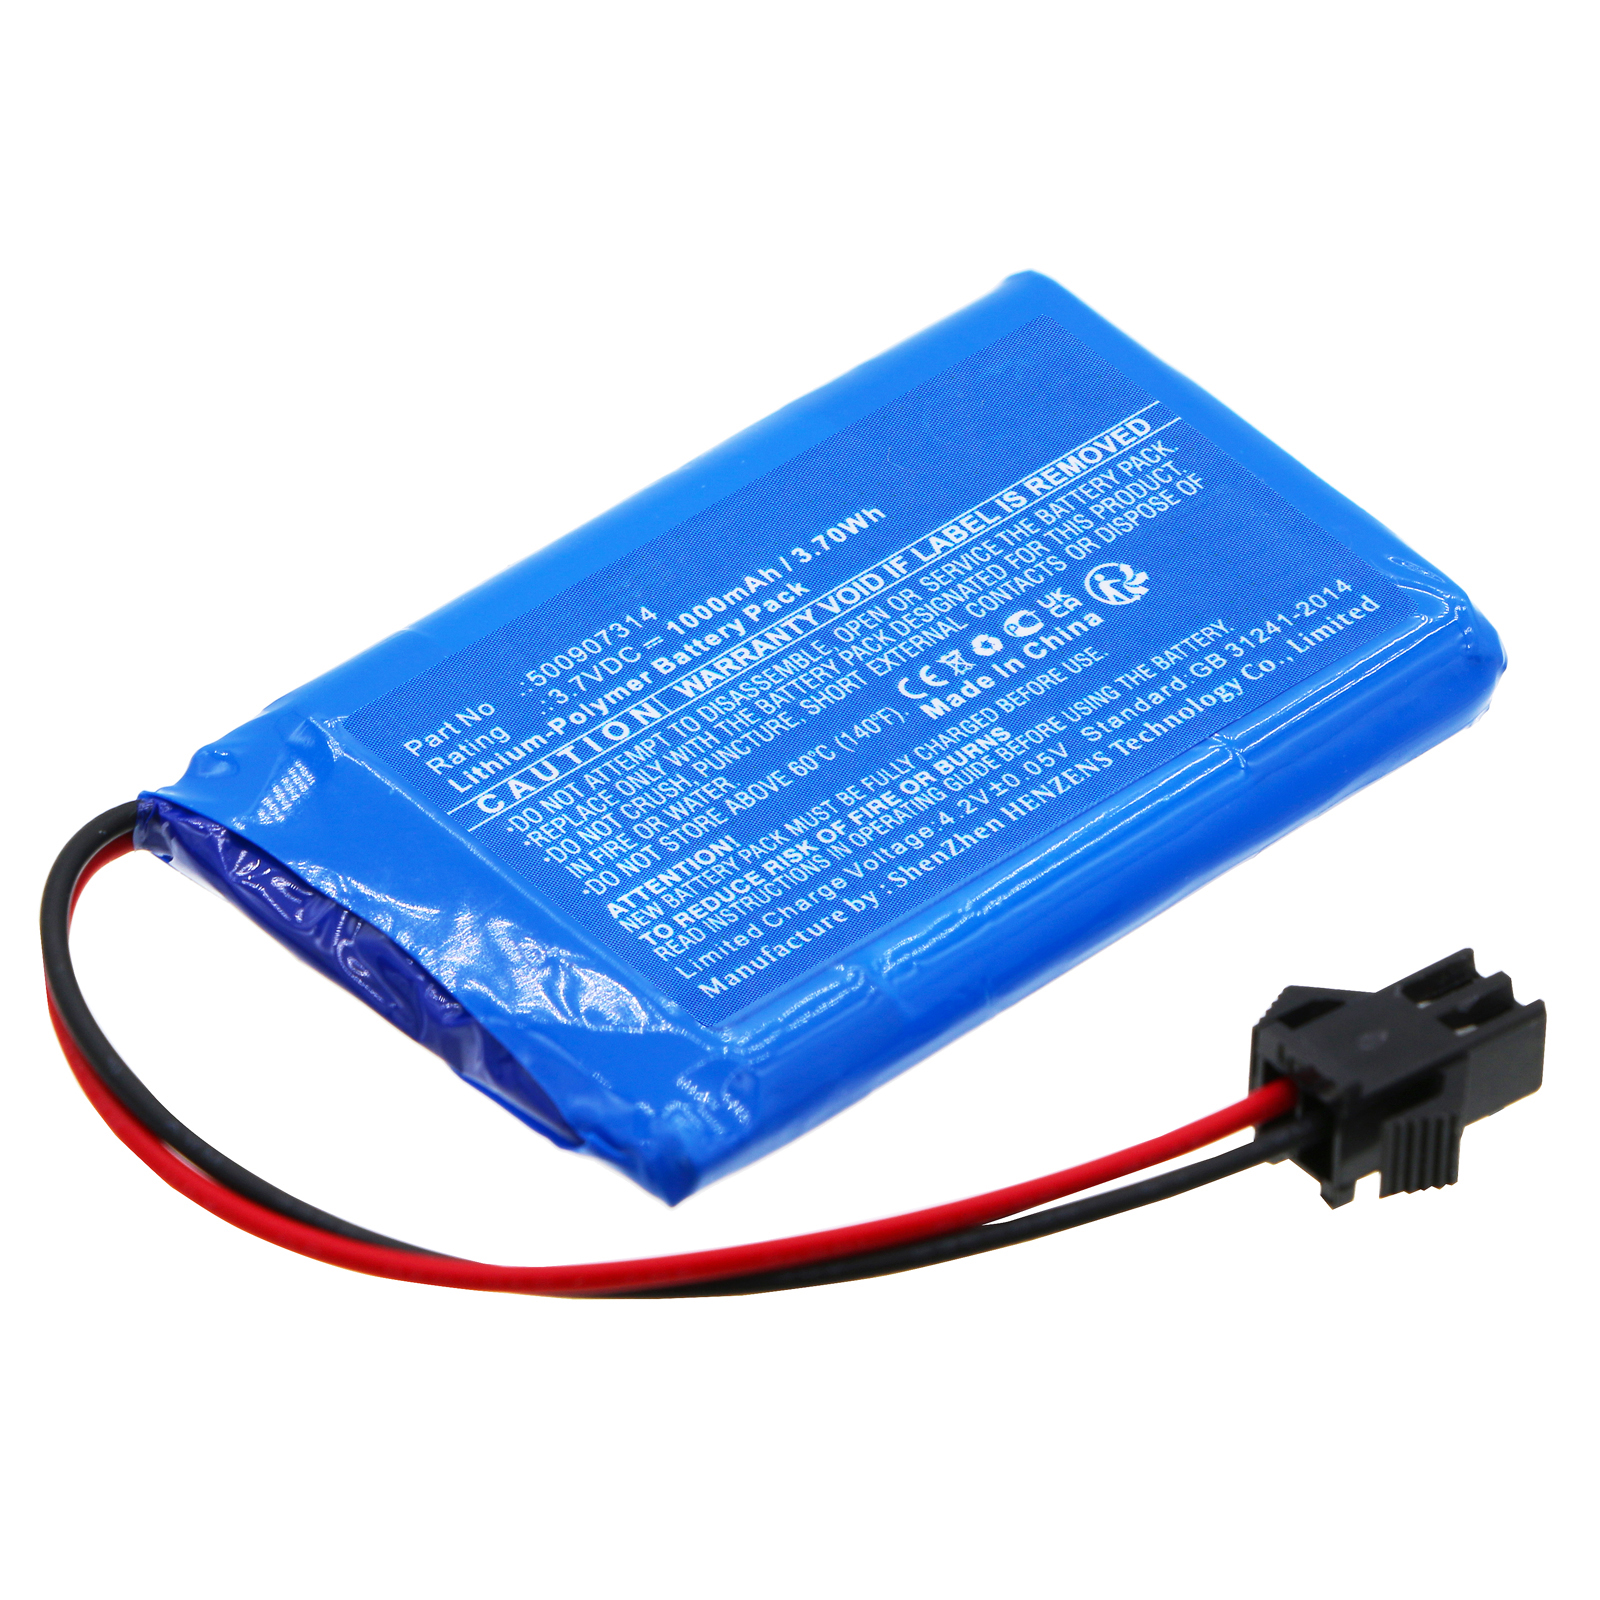 Synergy Digital Cars Battery, Compatible with Double Eagle 500907314 Cars Battery (Li-Pol, 3.7V, 1000mAh)